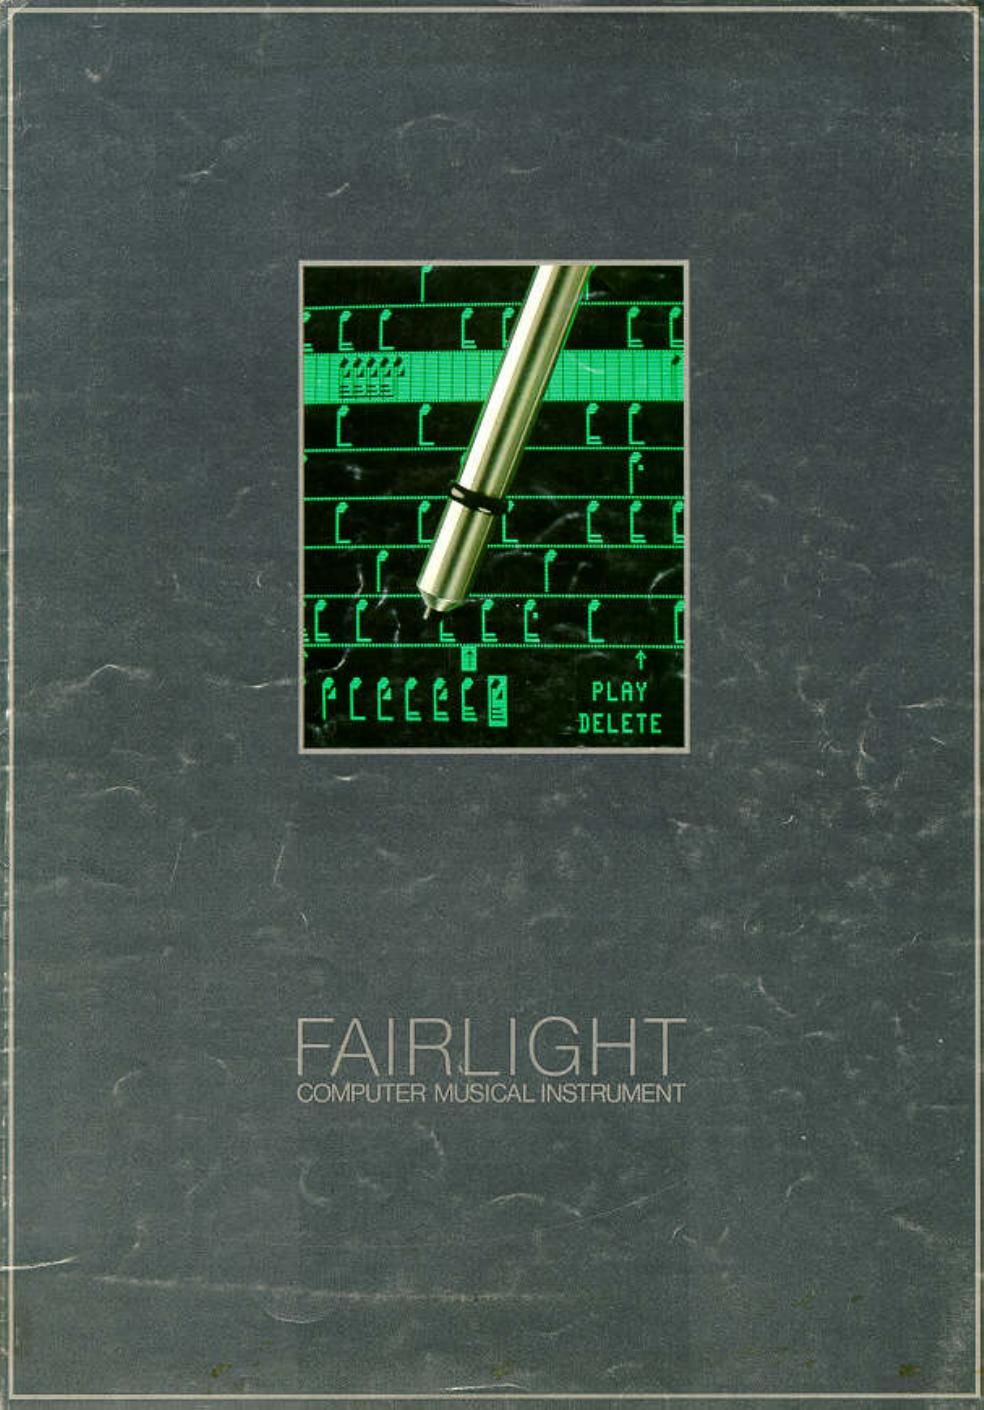 fairlight cmi brochure